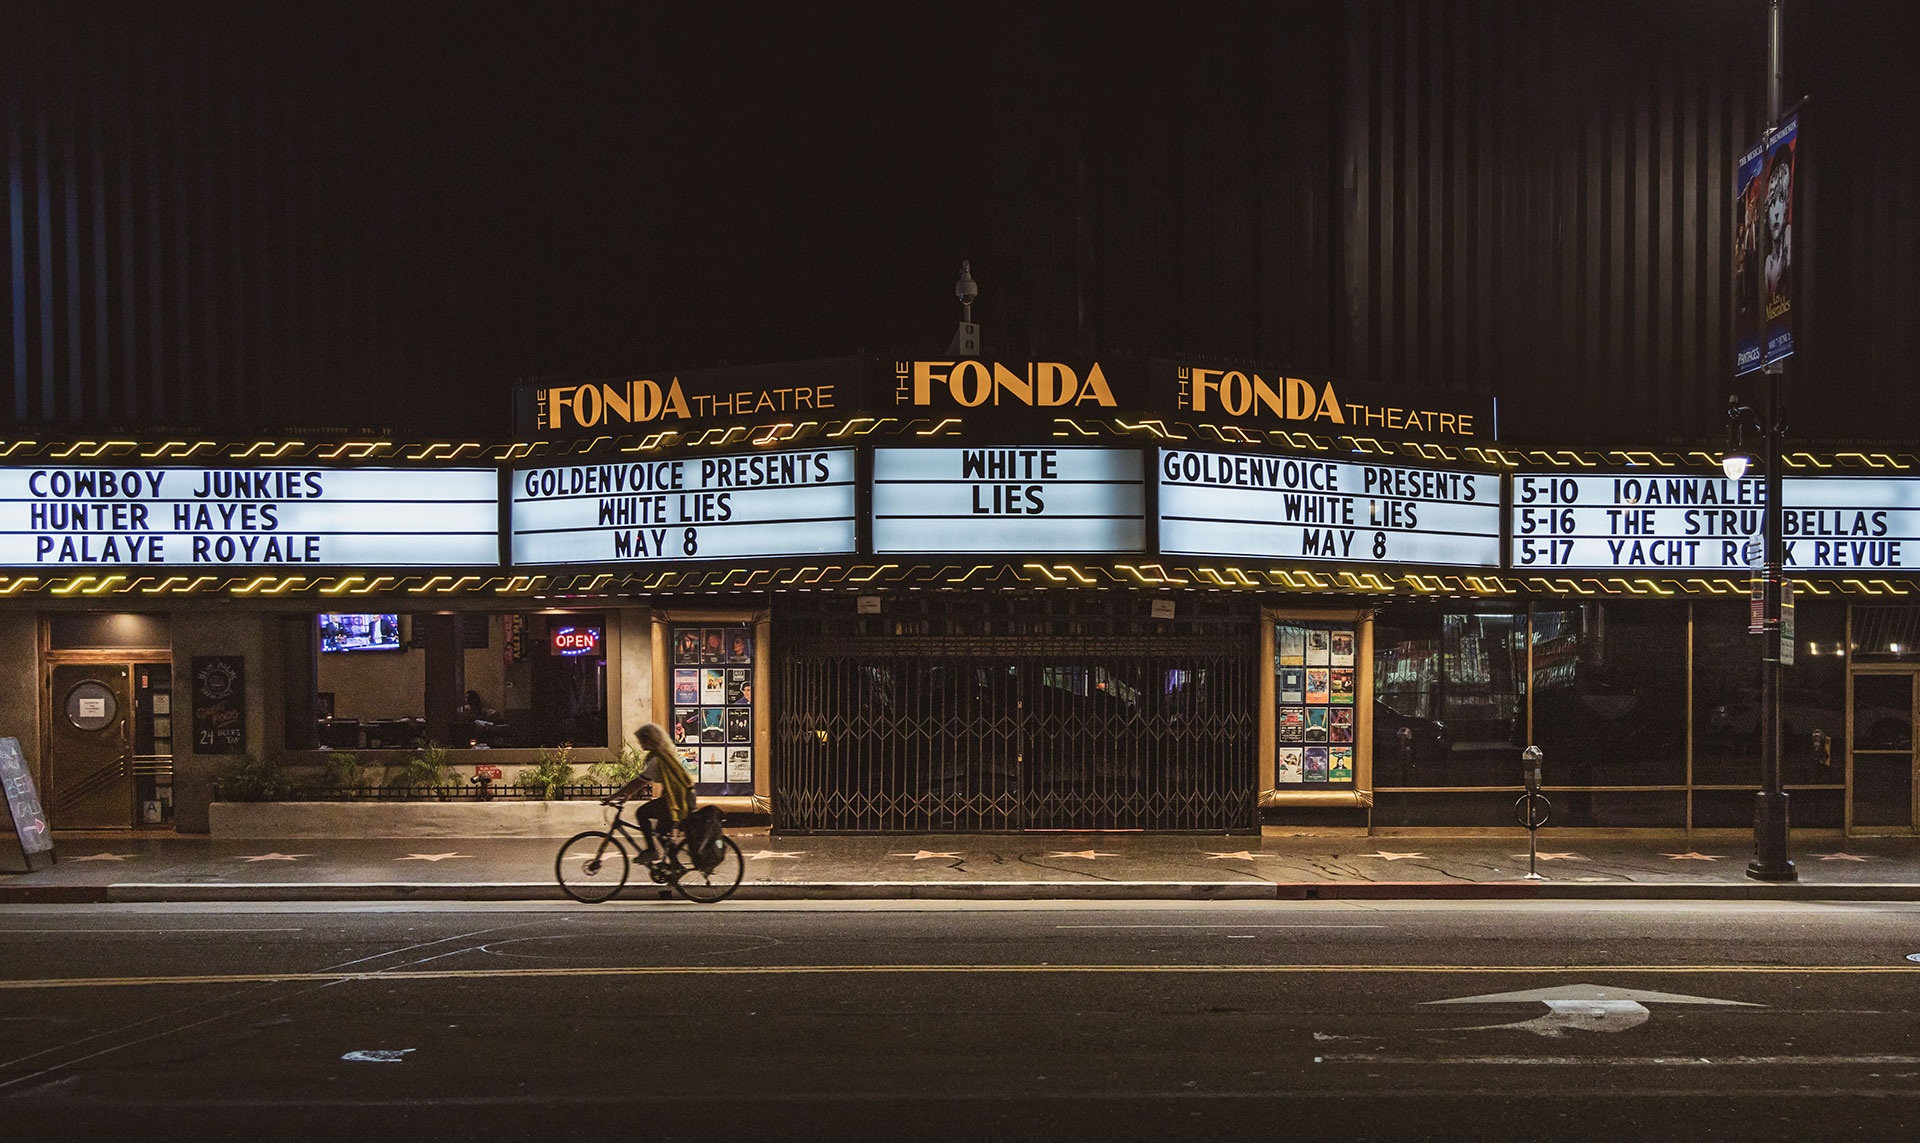 The Fonda-Theatre on Hollywood Boulevard at night